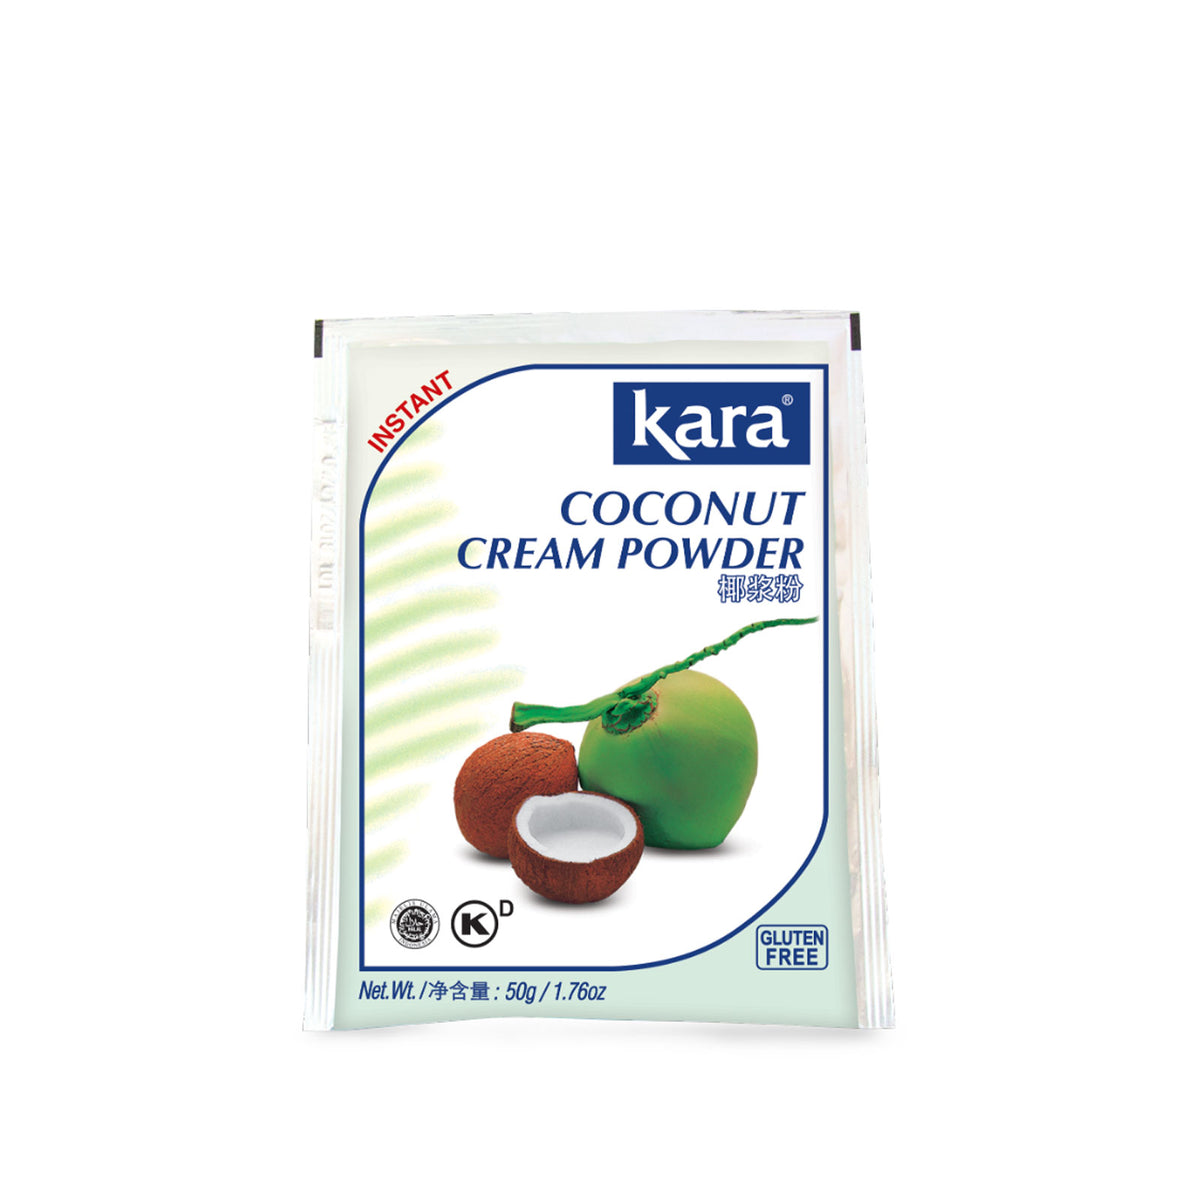 kara coconut cream powder - 1.76oz